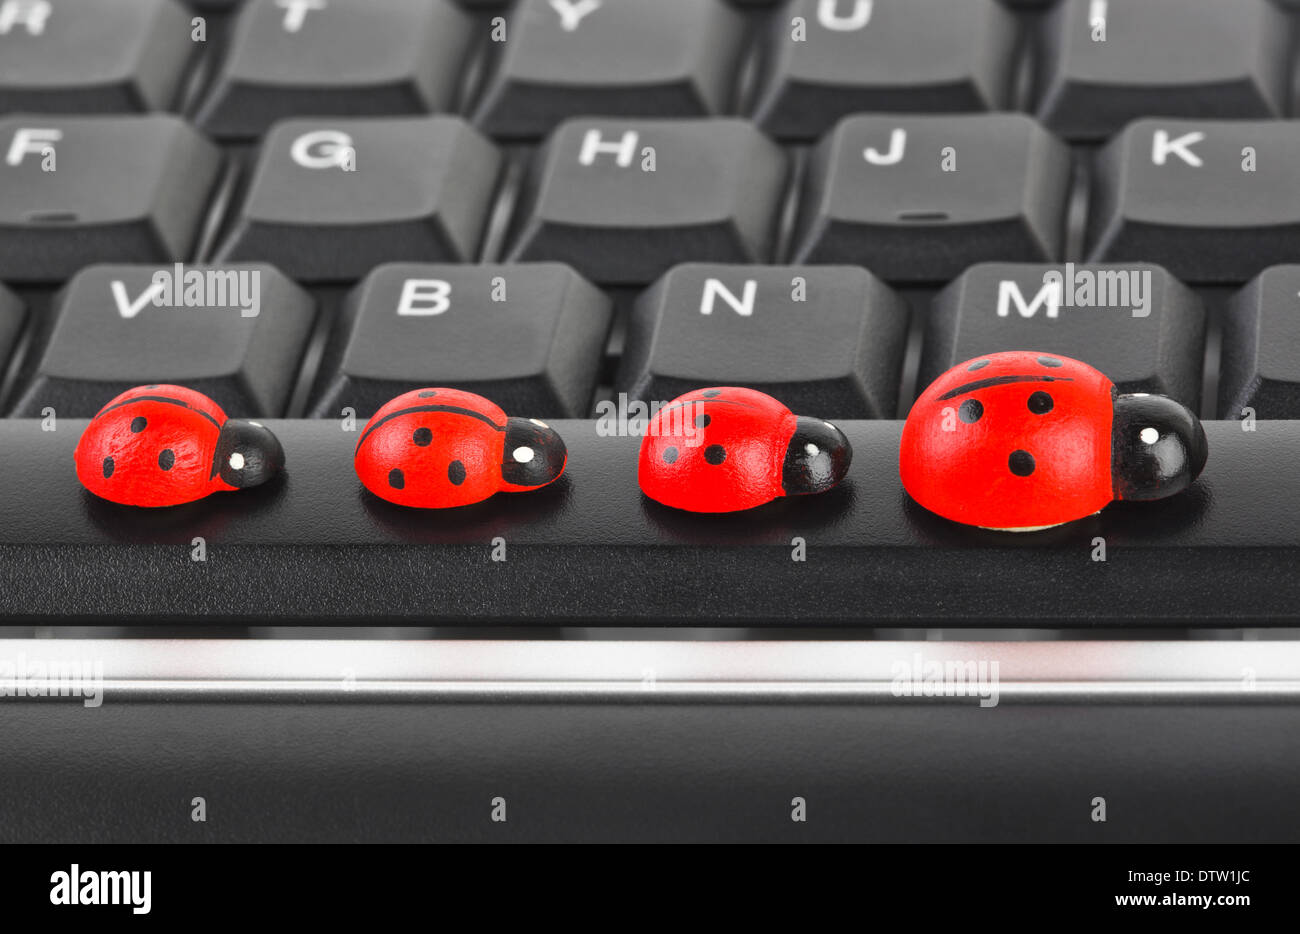 Toy ladybirds on computer keyboard Stock Photo